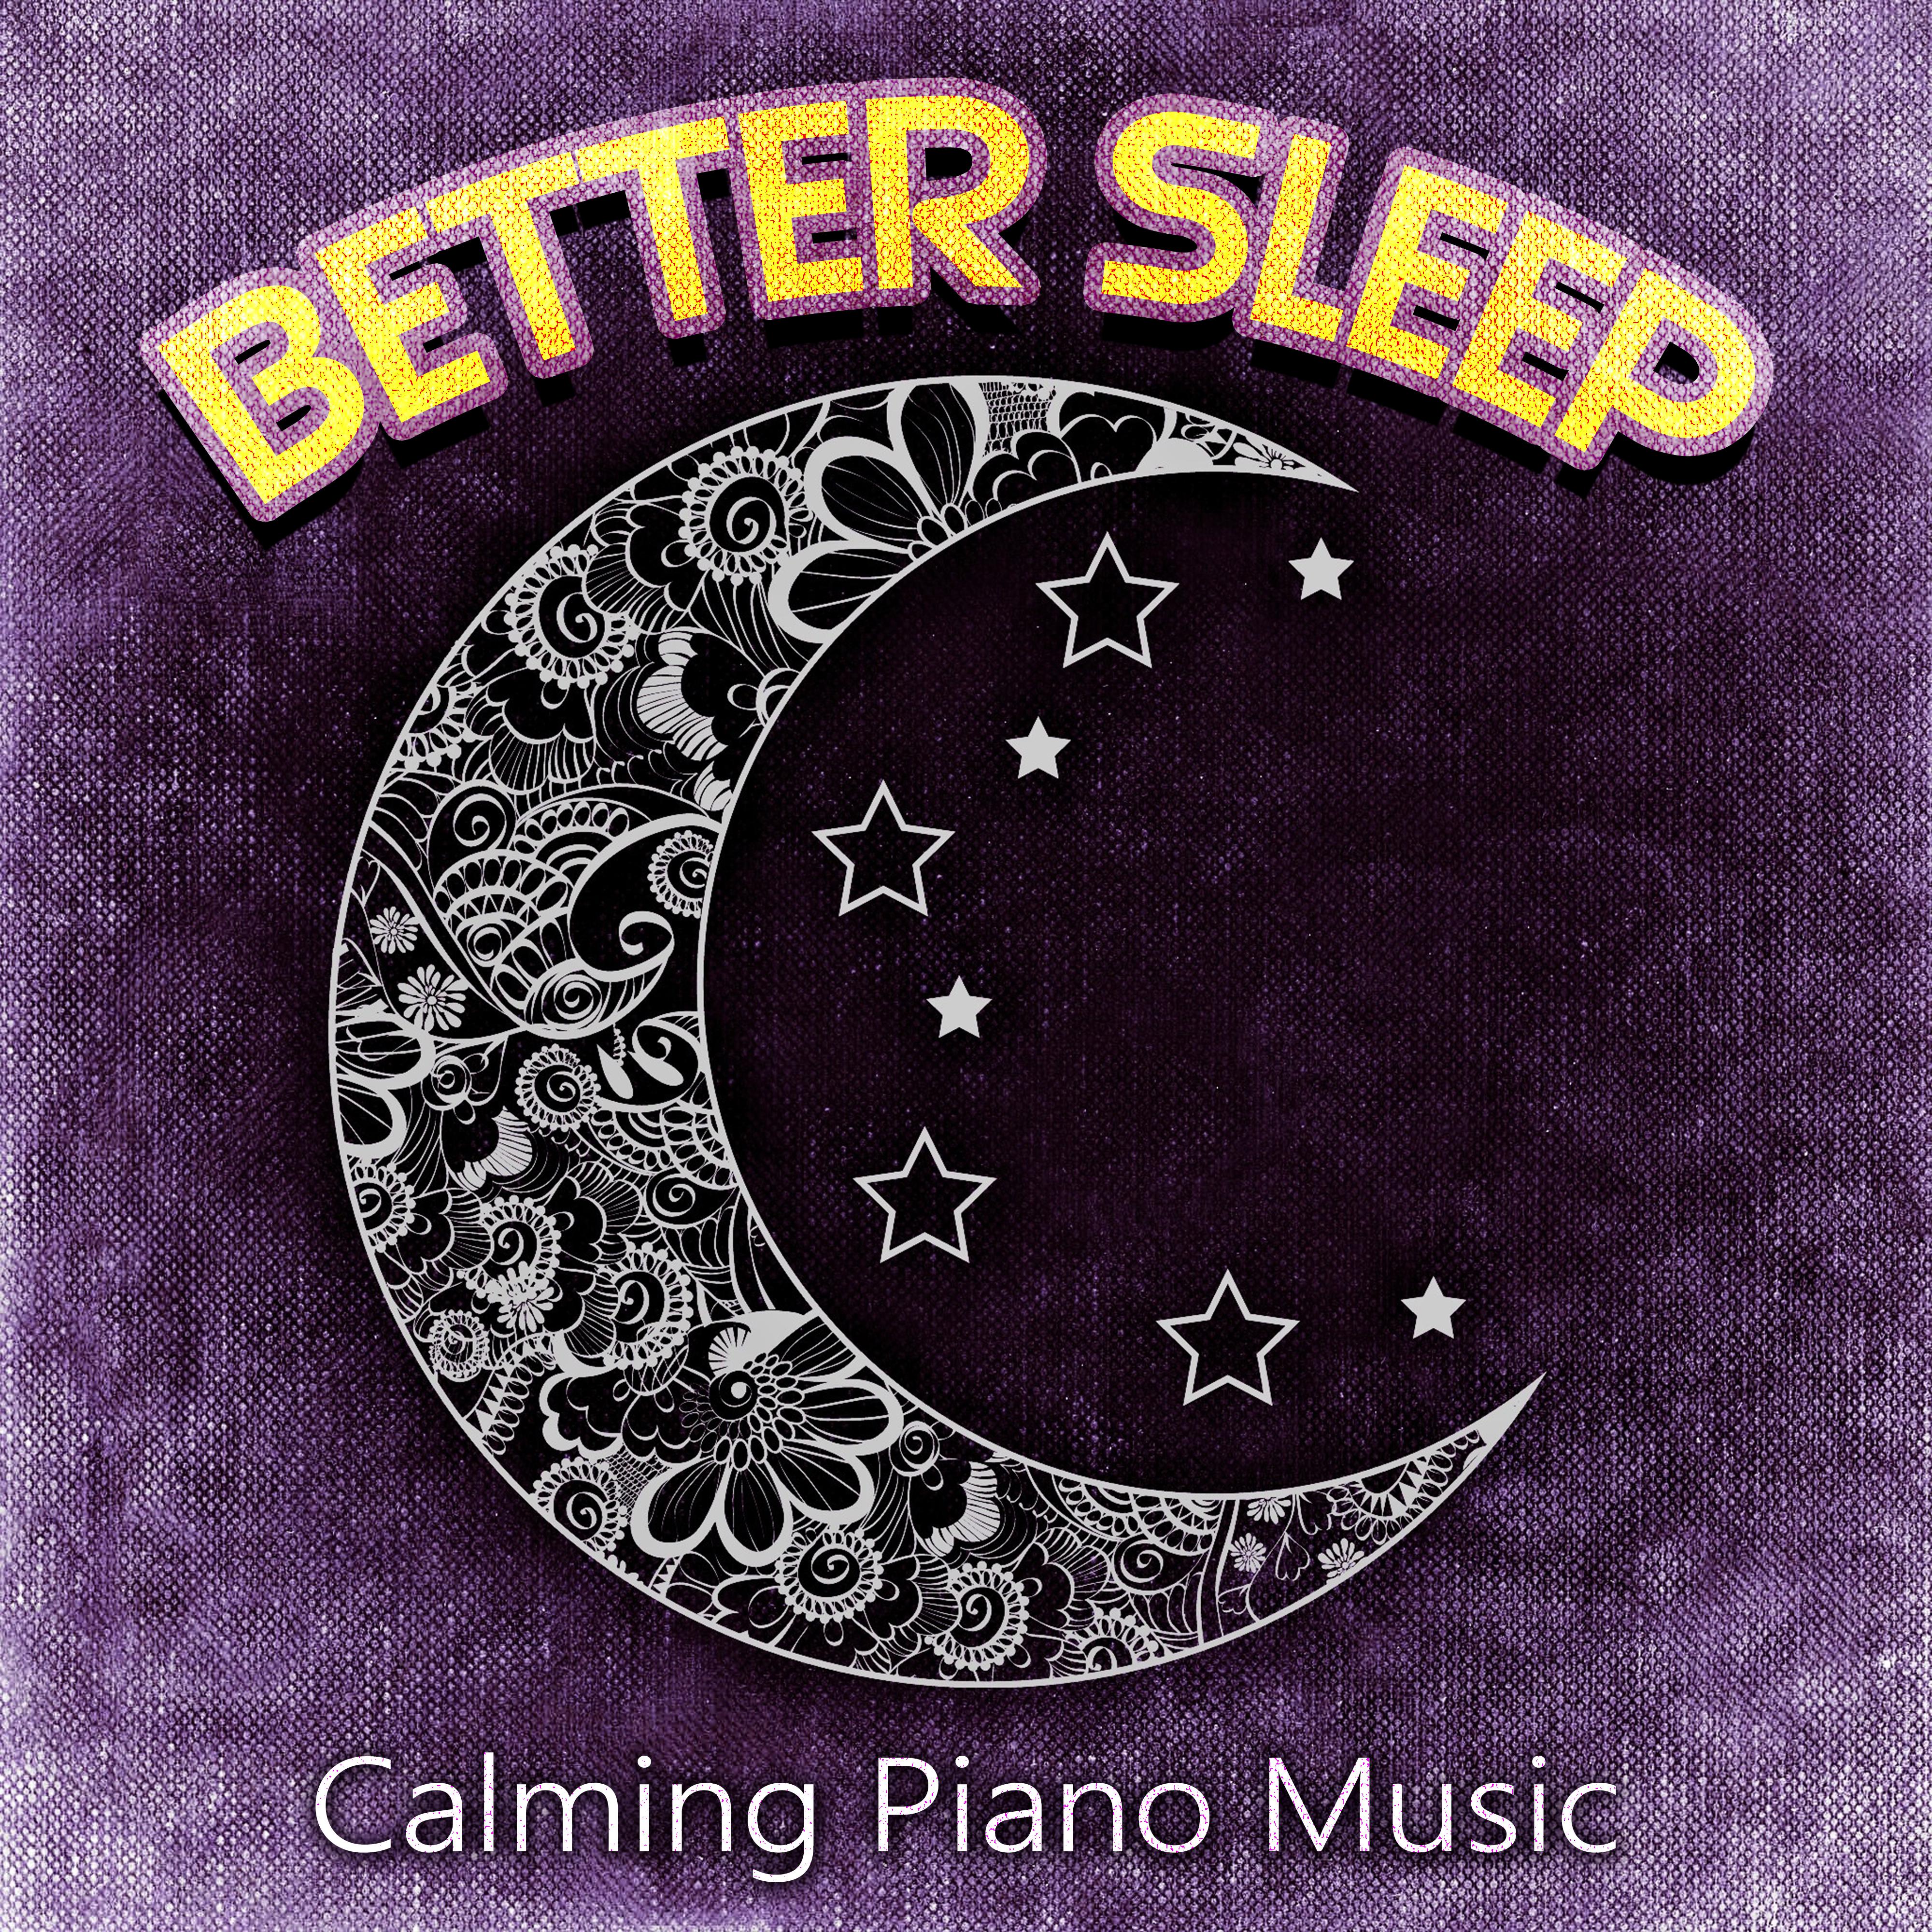 Better Sleep: Calming Piano Music – Beautiful Piano Lullabies to Help You Relax, Healing Therapy Songs, Relaxing Music for Deep Sleep, Natural Sleep Aid